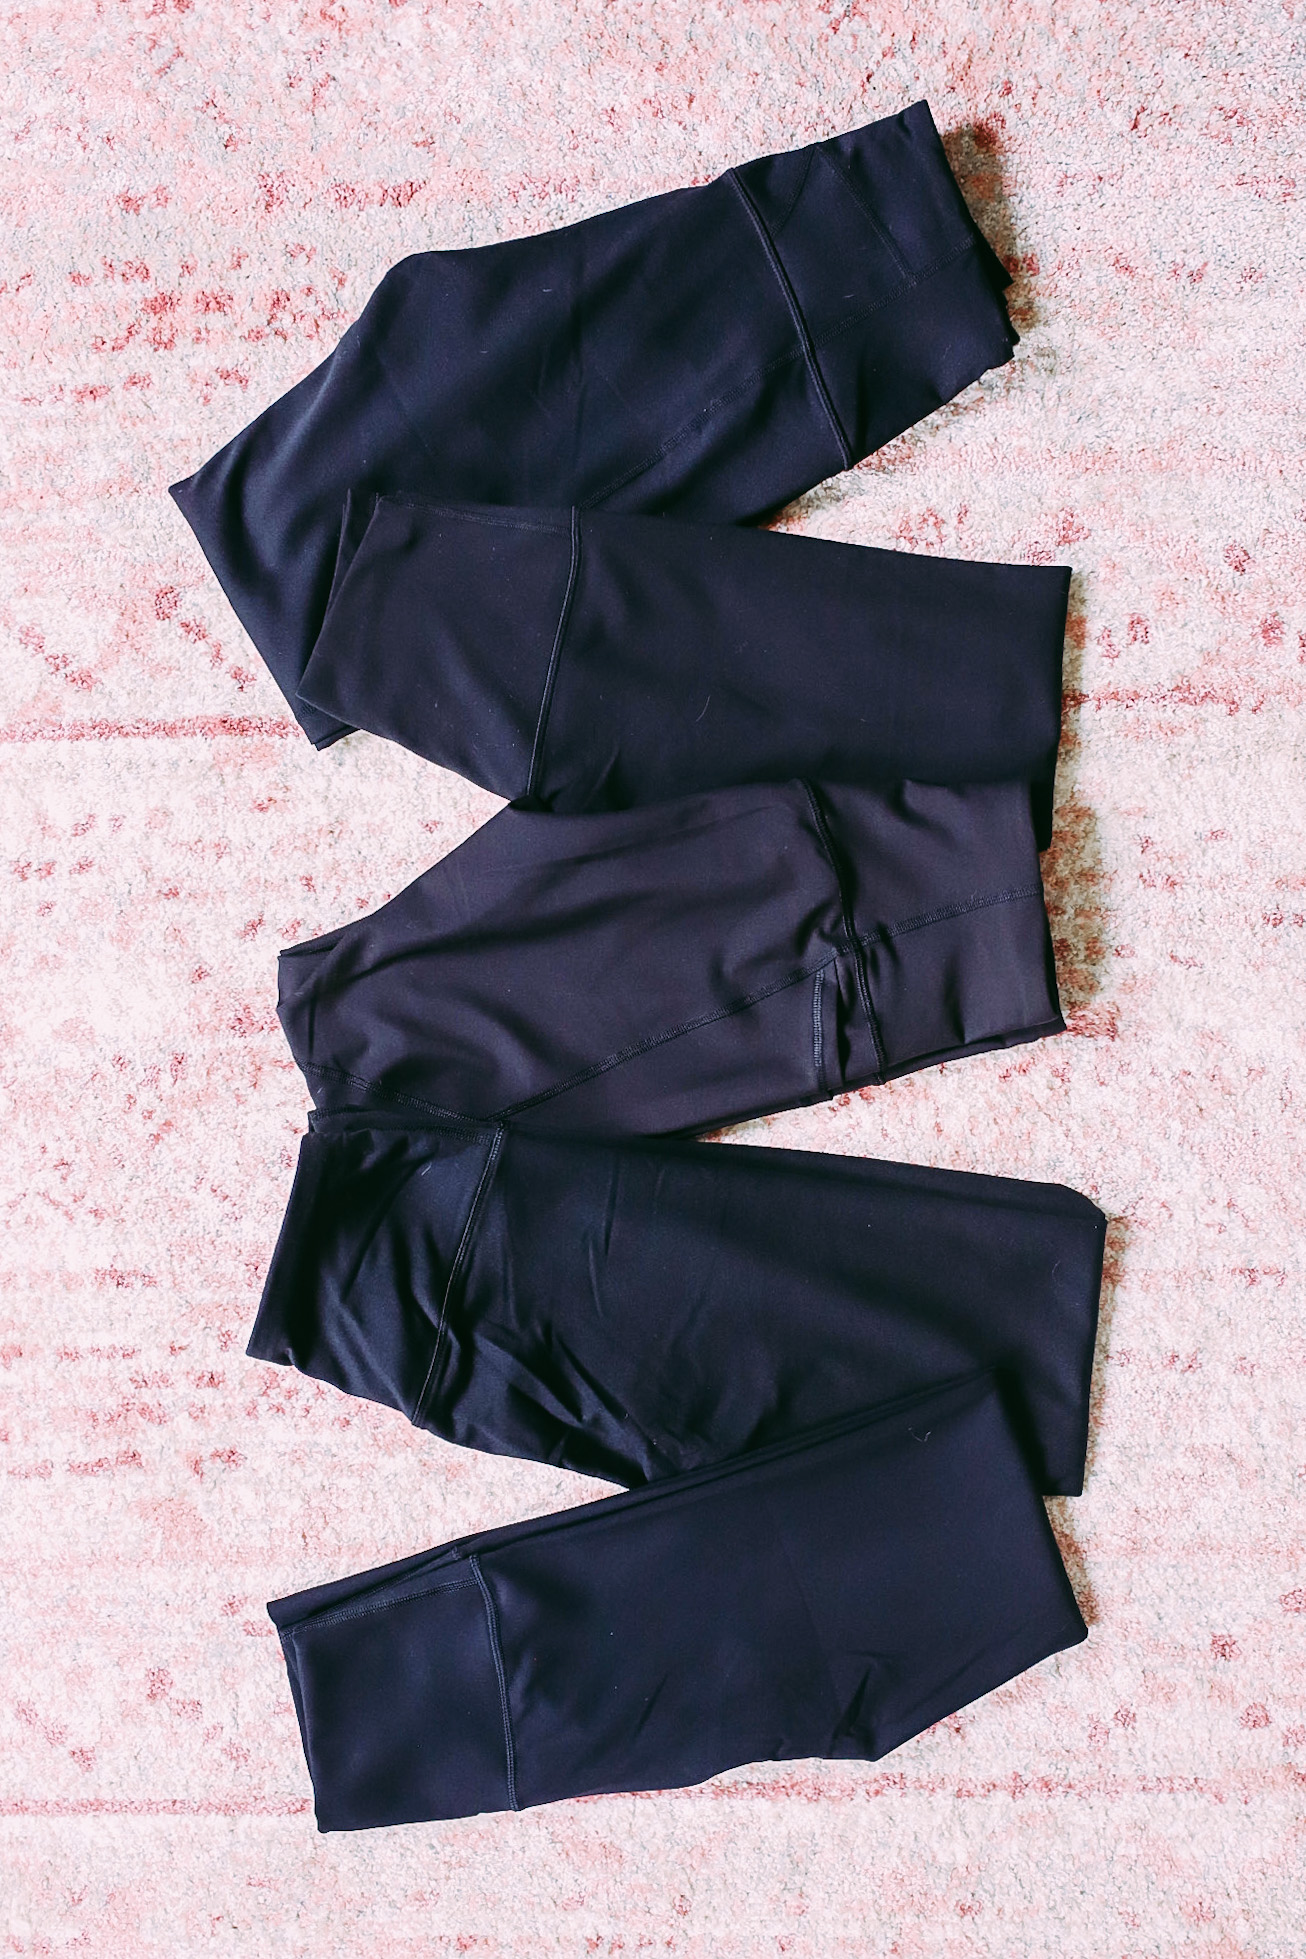 Buy Lululemon Your True Trouser 7/8 Pant - Black At 28% Off